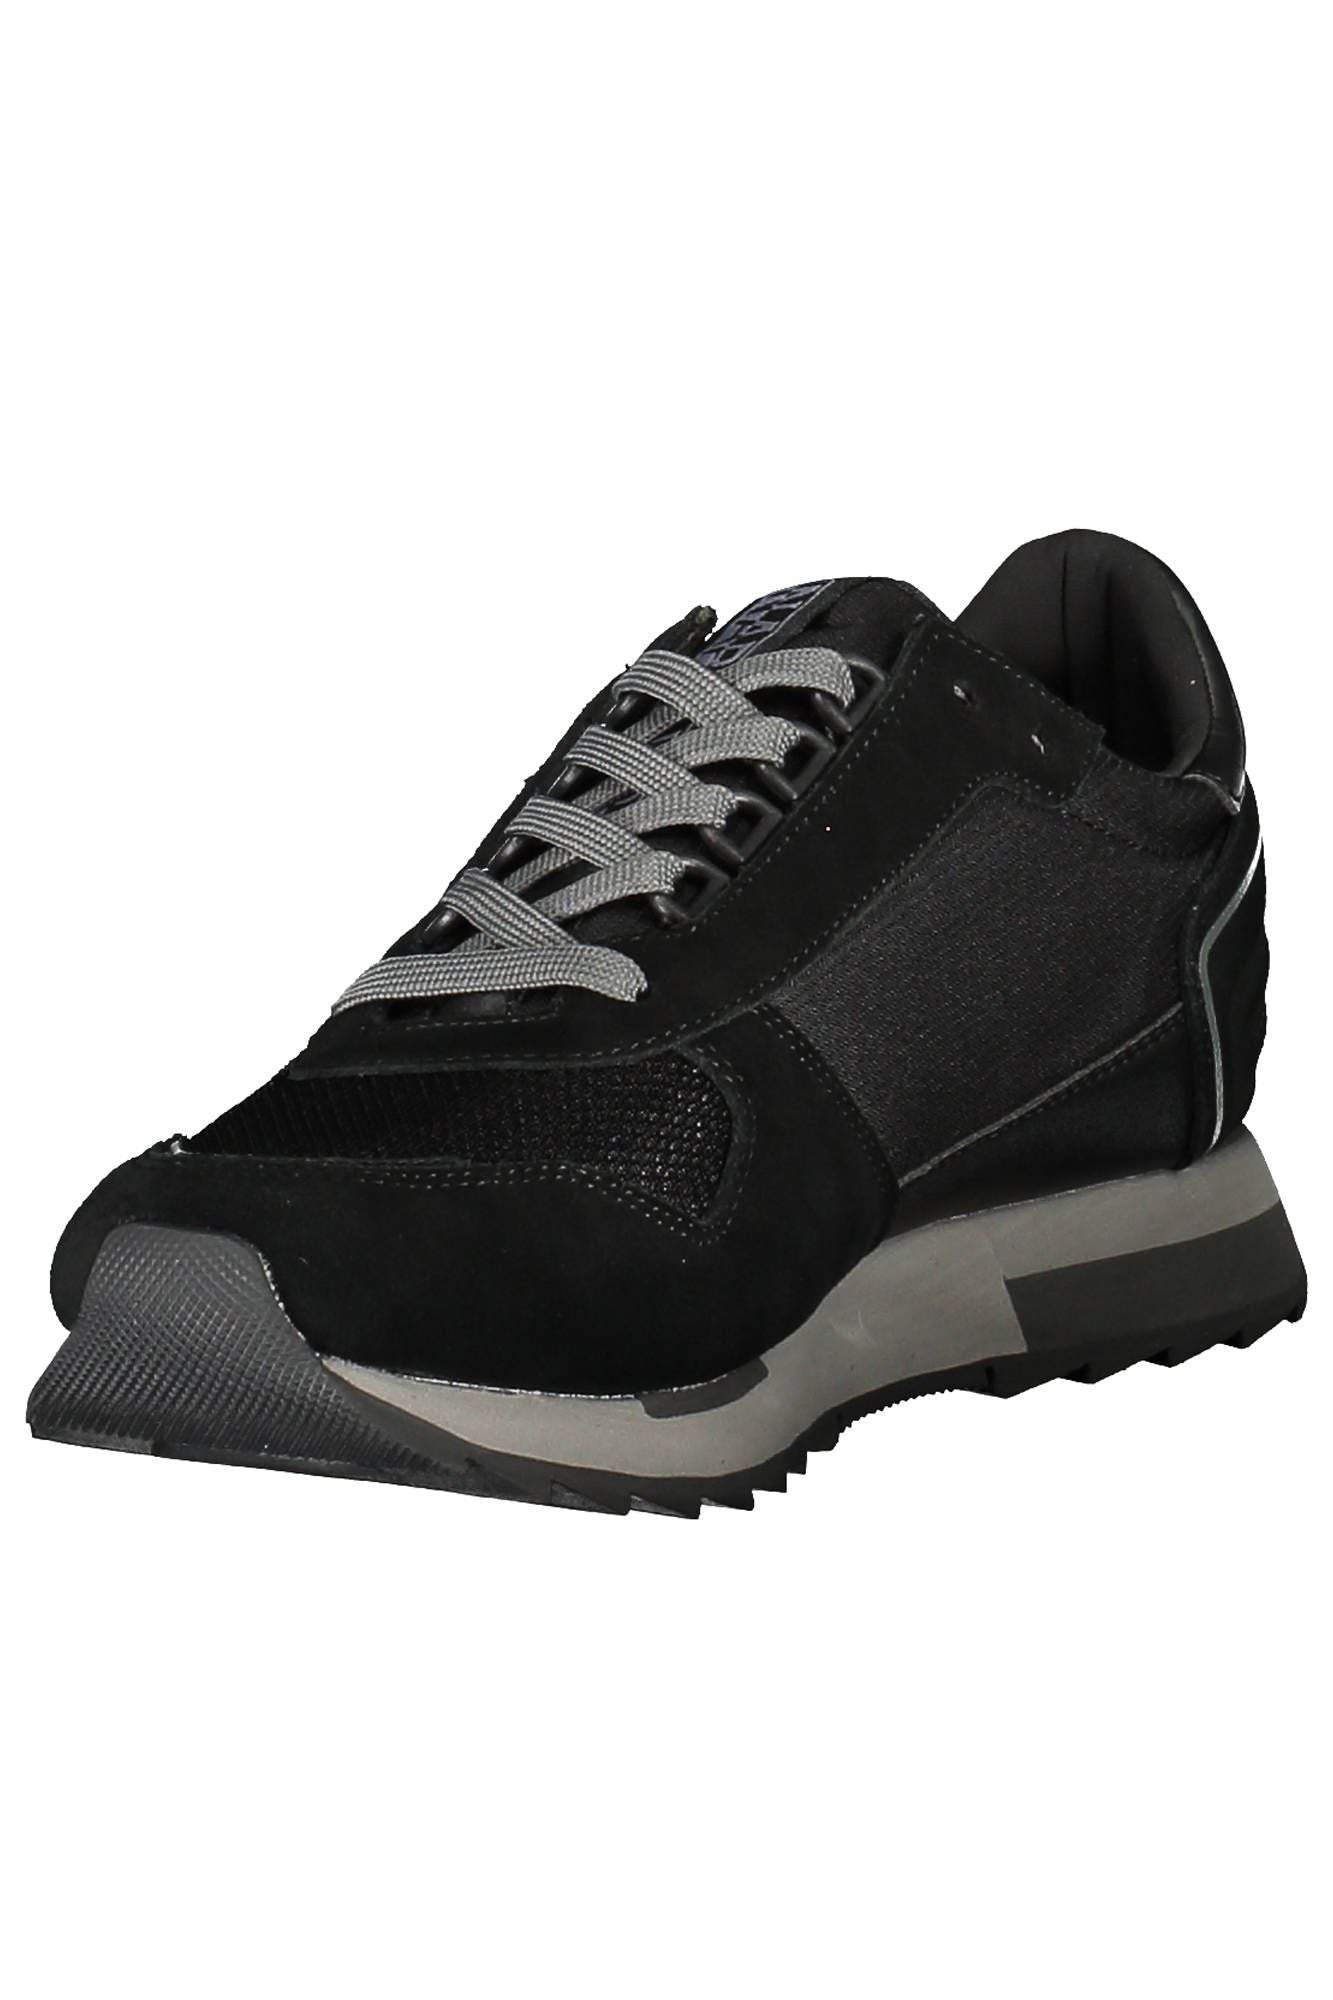 Napapijri Sleek Black Lace-Up Sneakers with Contrasting Details